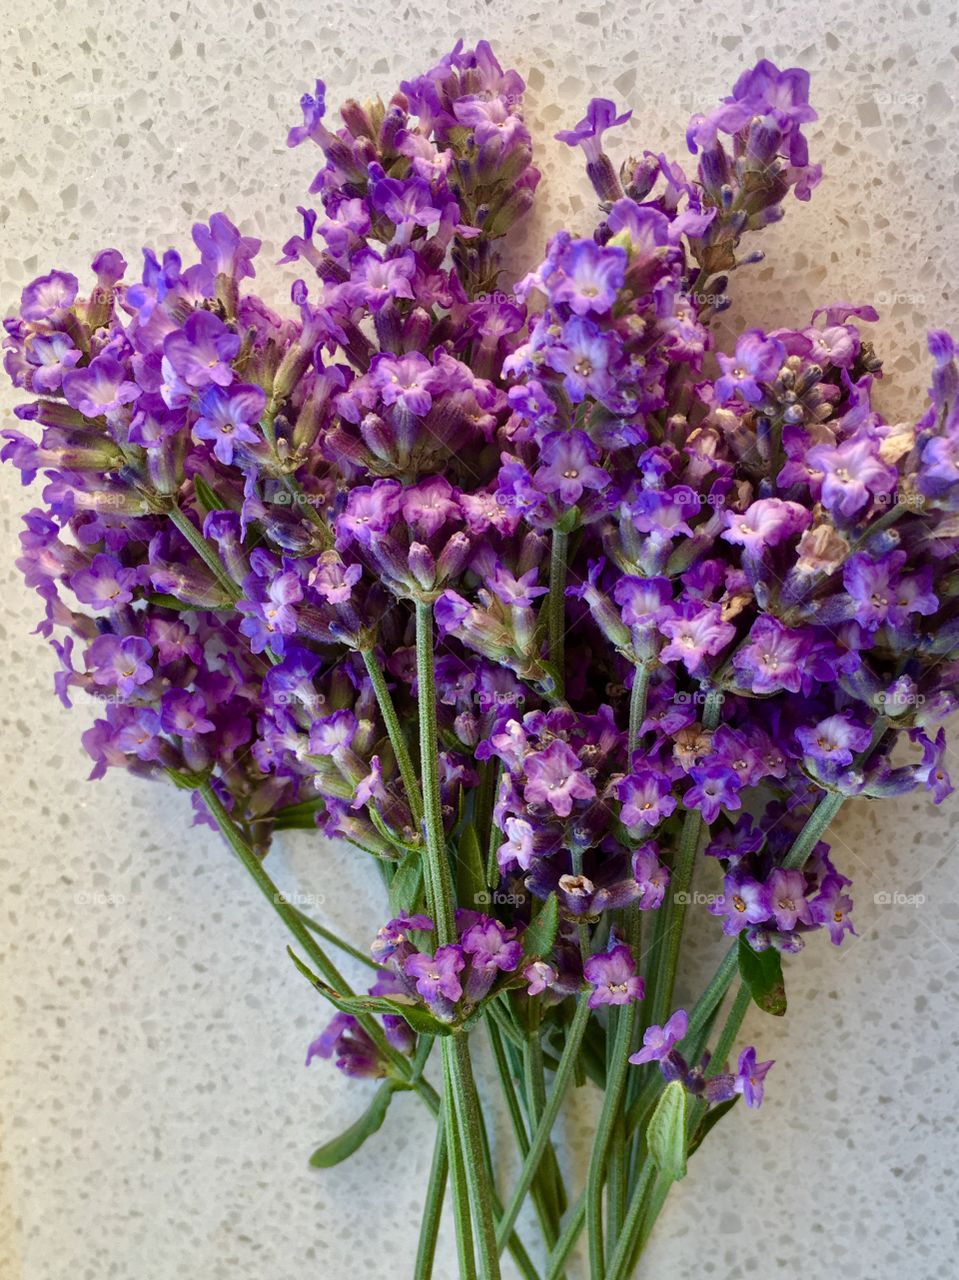 My lavender